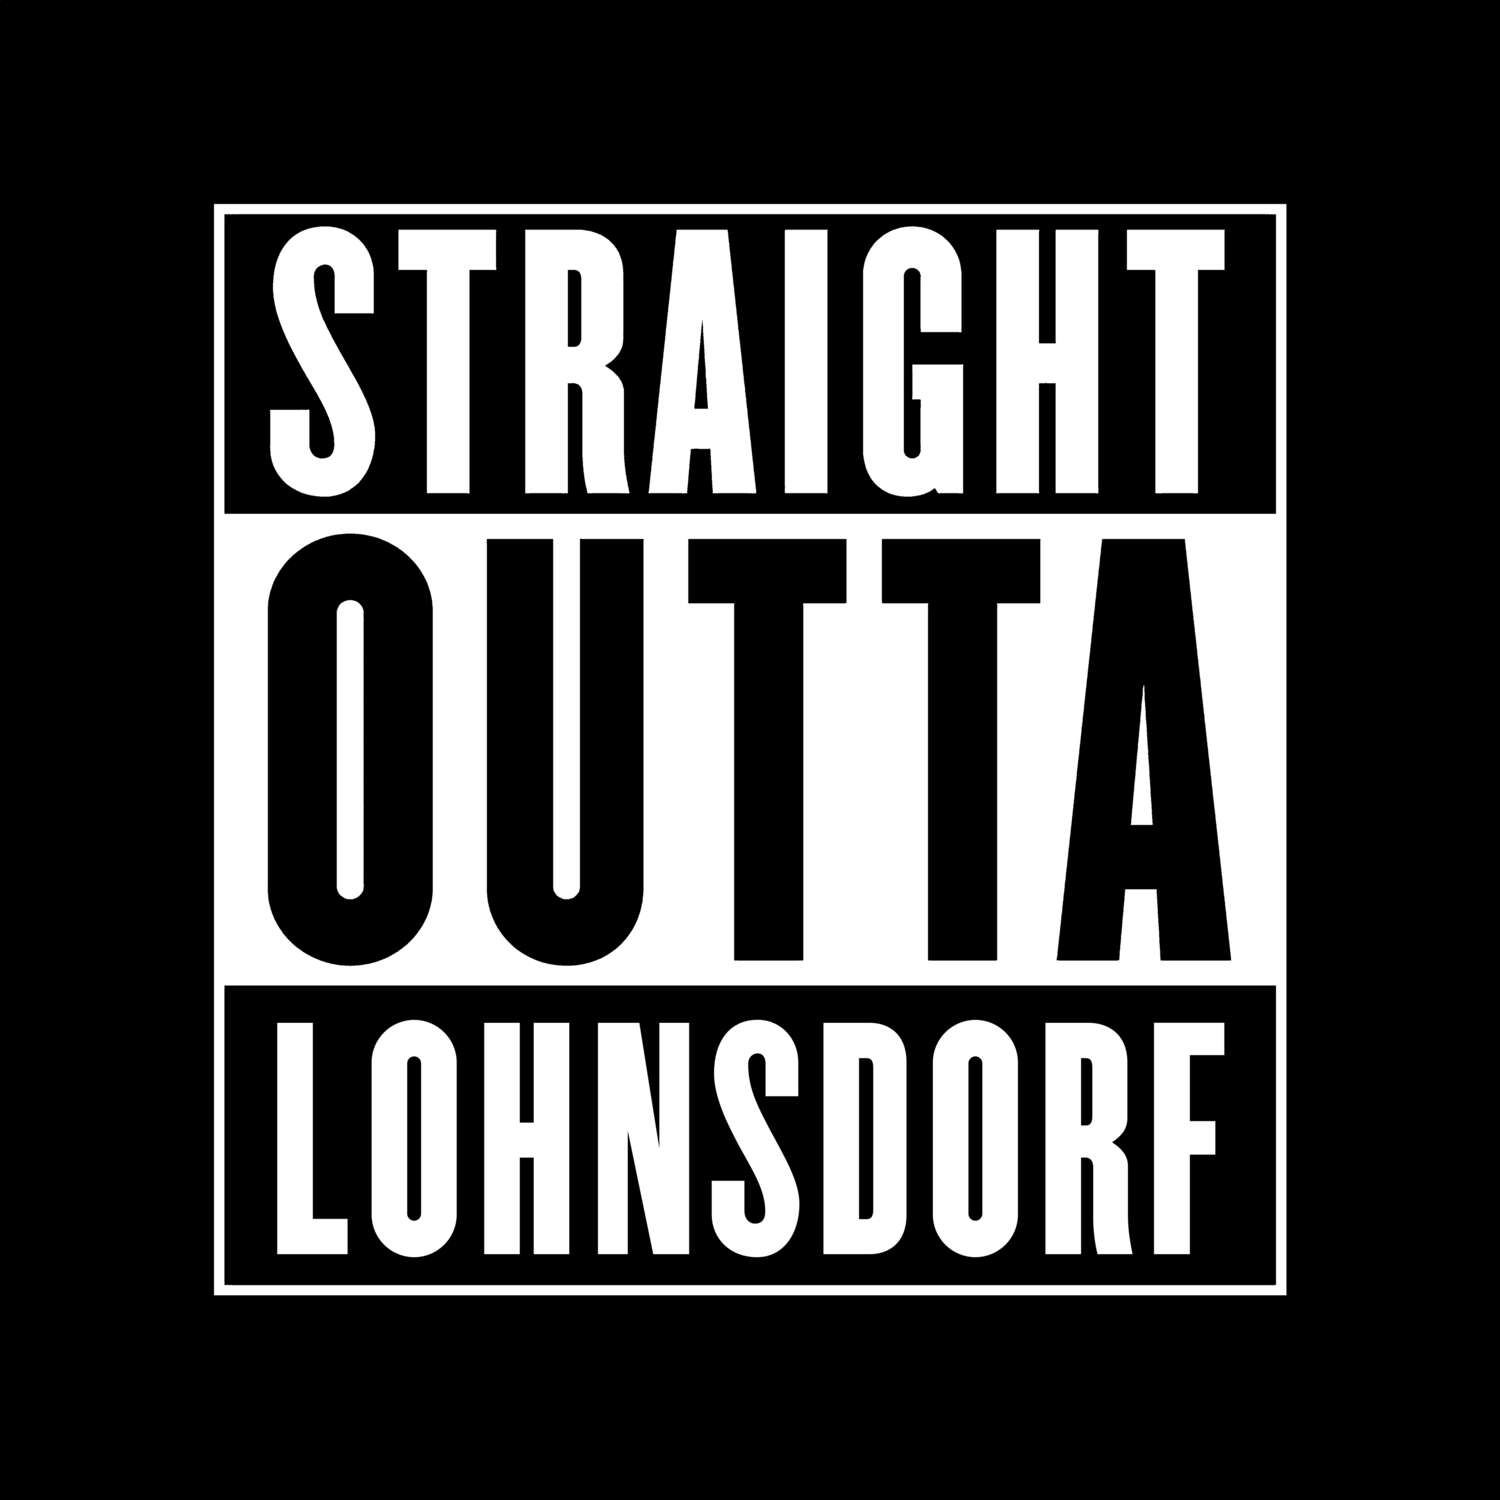 Lohnsdorf T-Shirt »Straight Outta«